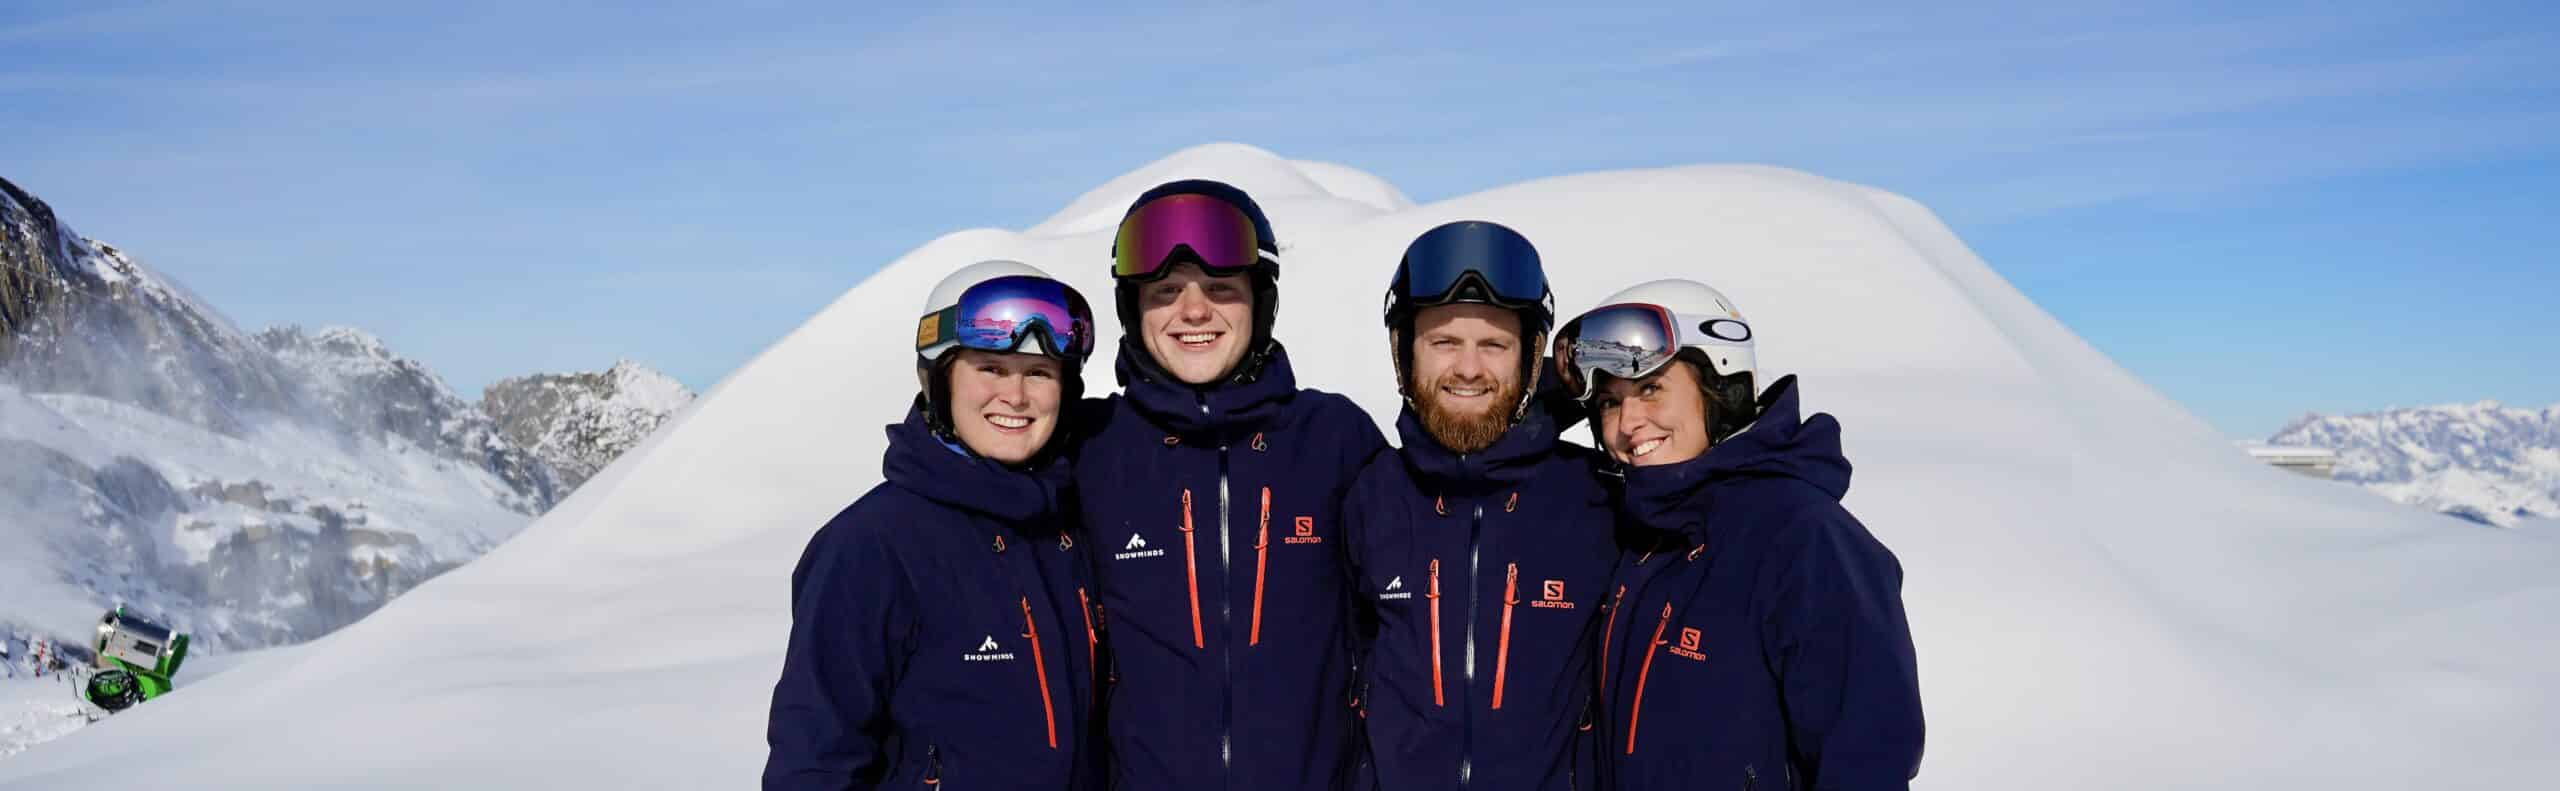 Snowminds Team Community Ski instructors